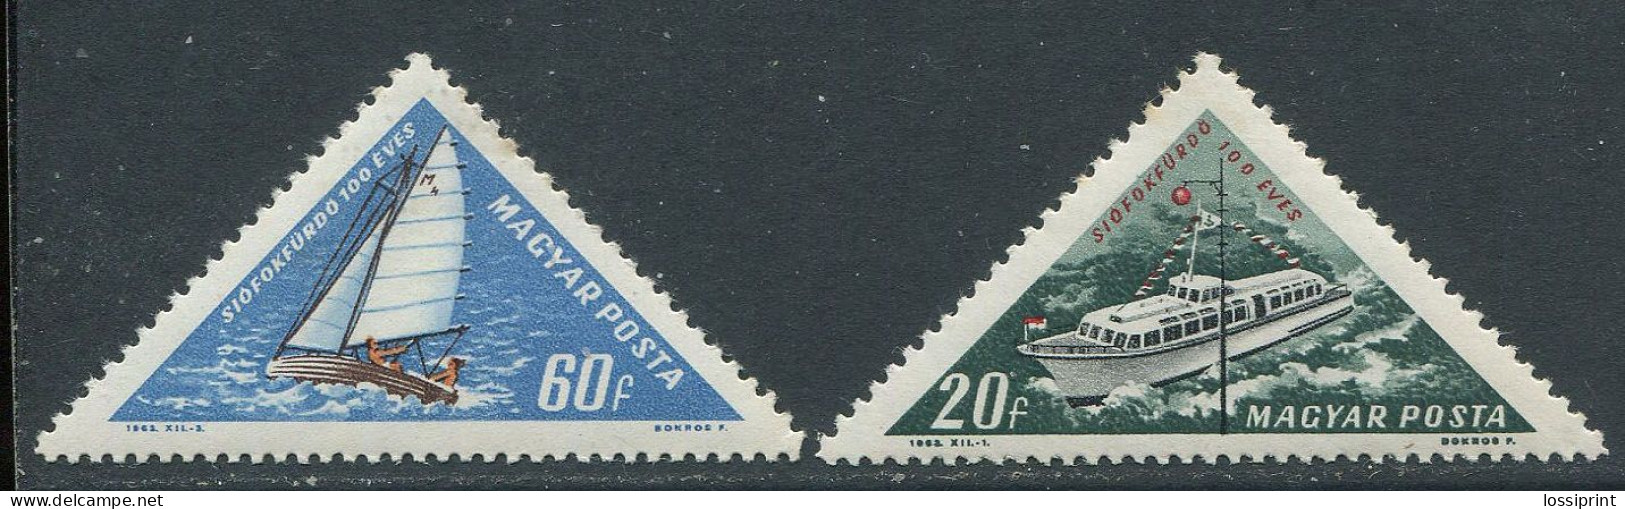 Hungary:Unused Stamps Sailing Ships, Passenger Ship, 1963, MNH - Ships